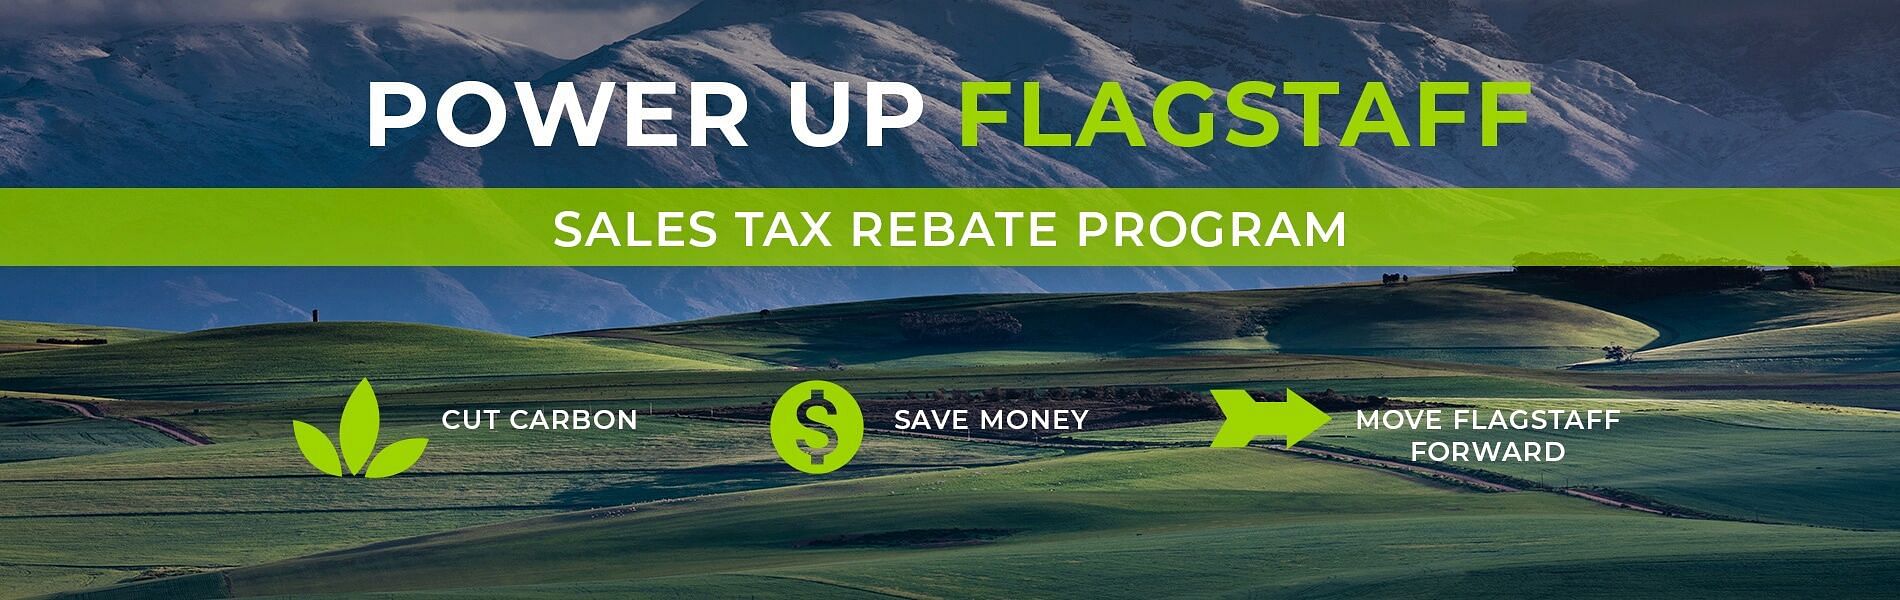 Power up flagstaff - sales tax rabate program - cut carbon, save money, move flagstaff forward